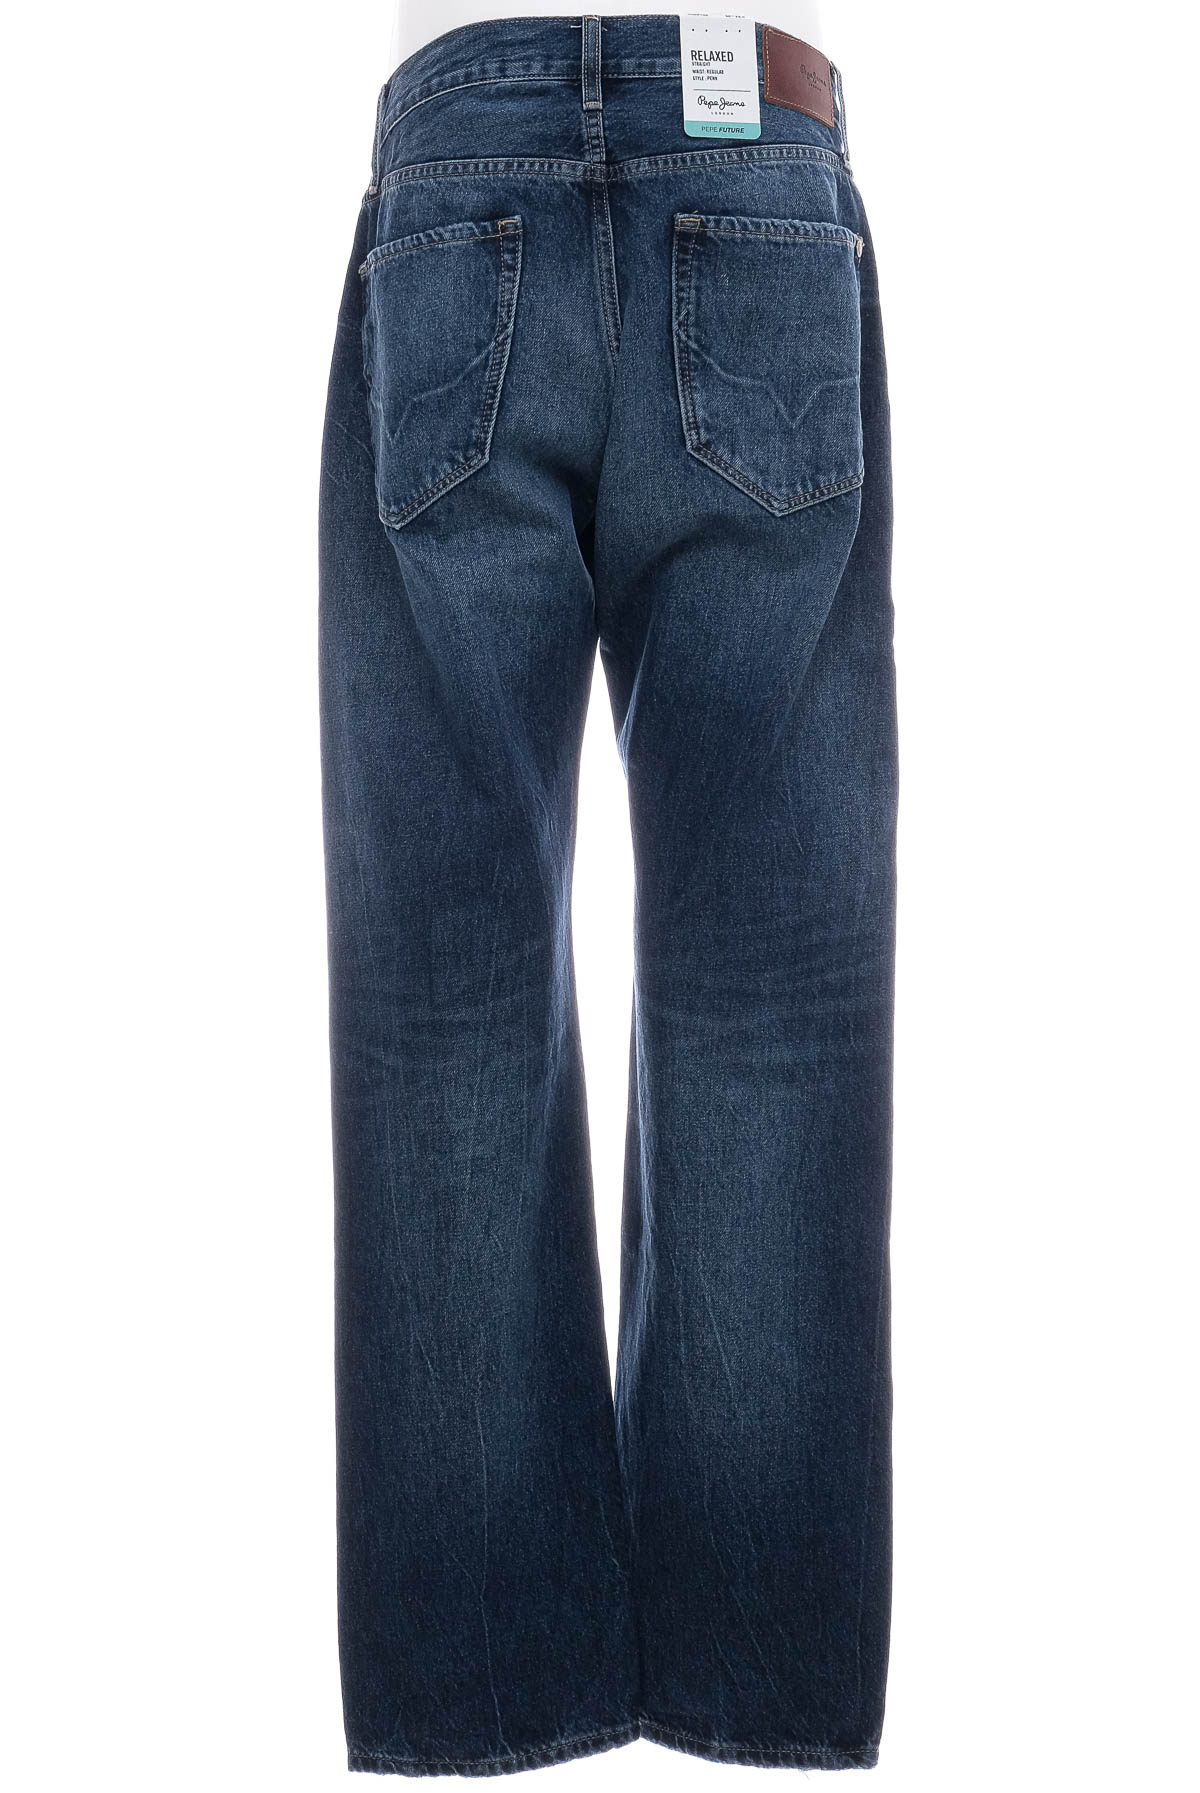 Men's jeans - Pepe Jeans - 1